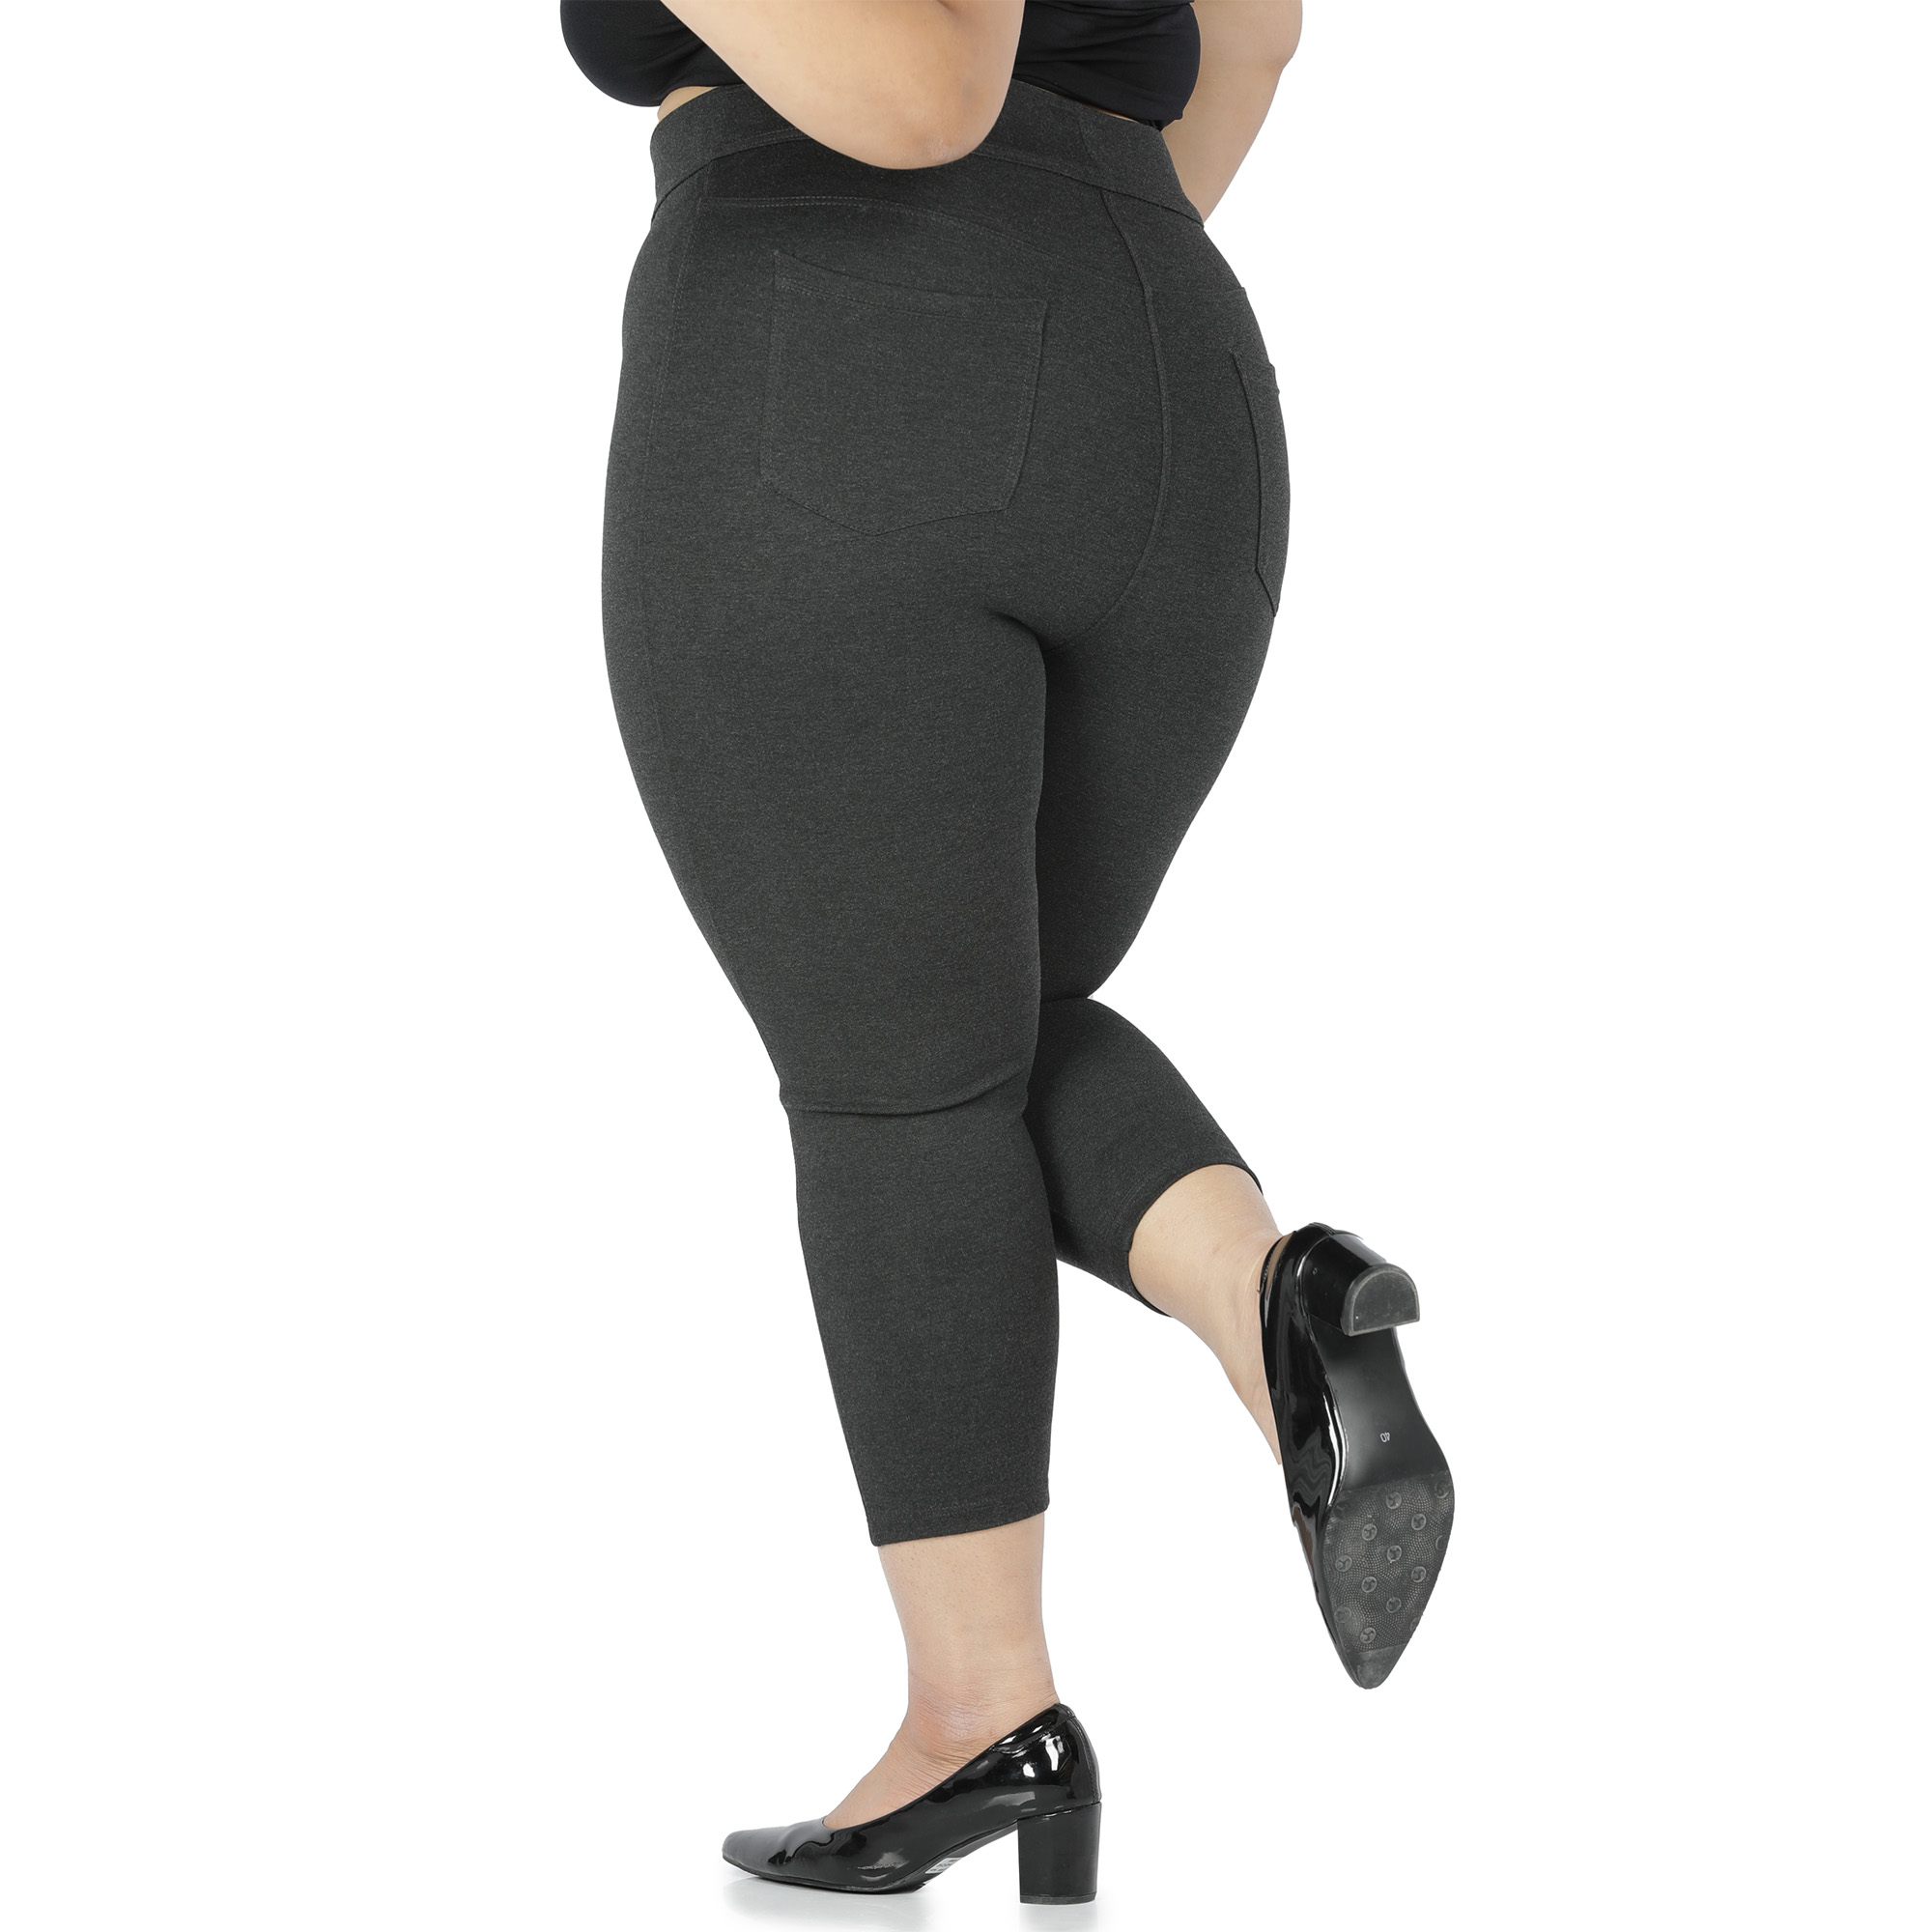 Charcoal grey capris women gym wear High waist 2 back pockets - Belore Slims